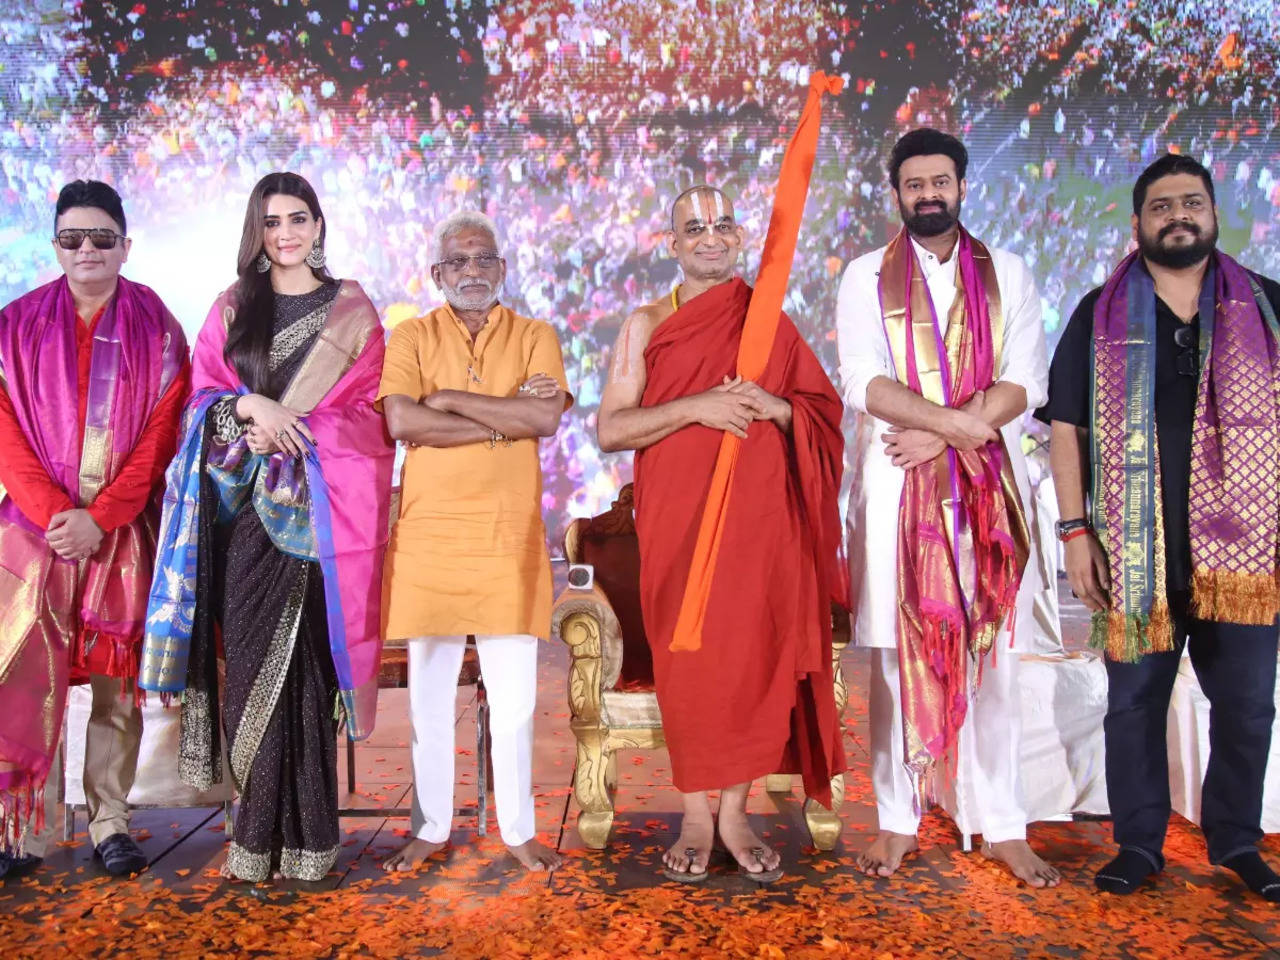 Sri Chinna Jeeyar Swamiji inspires youth at Prabhas' 'Adipurush' pre-release event | Telugu Movie News - Times of India